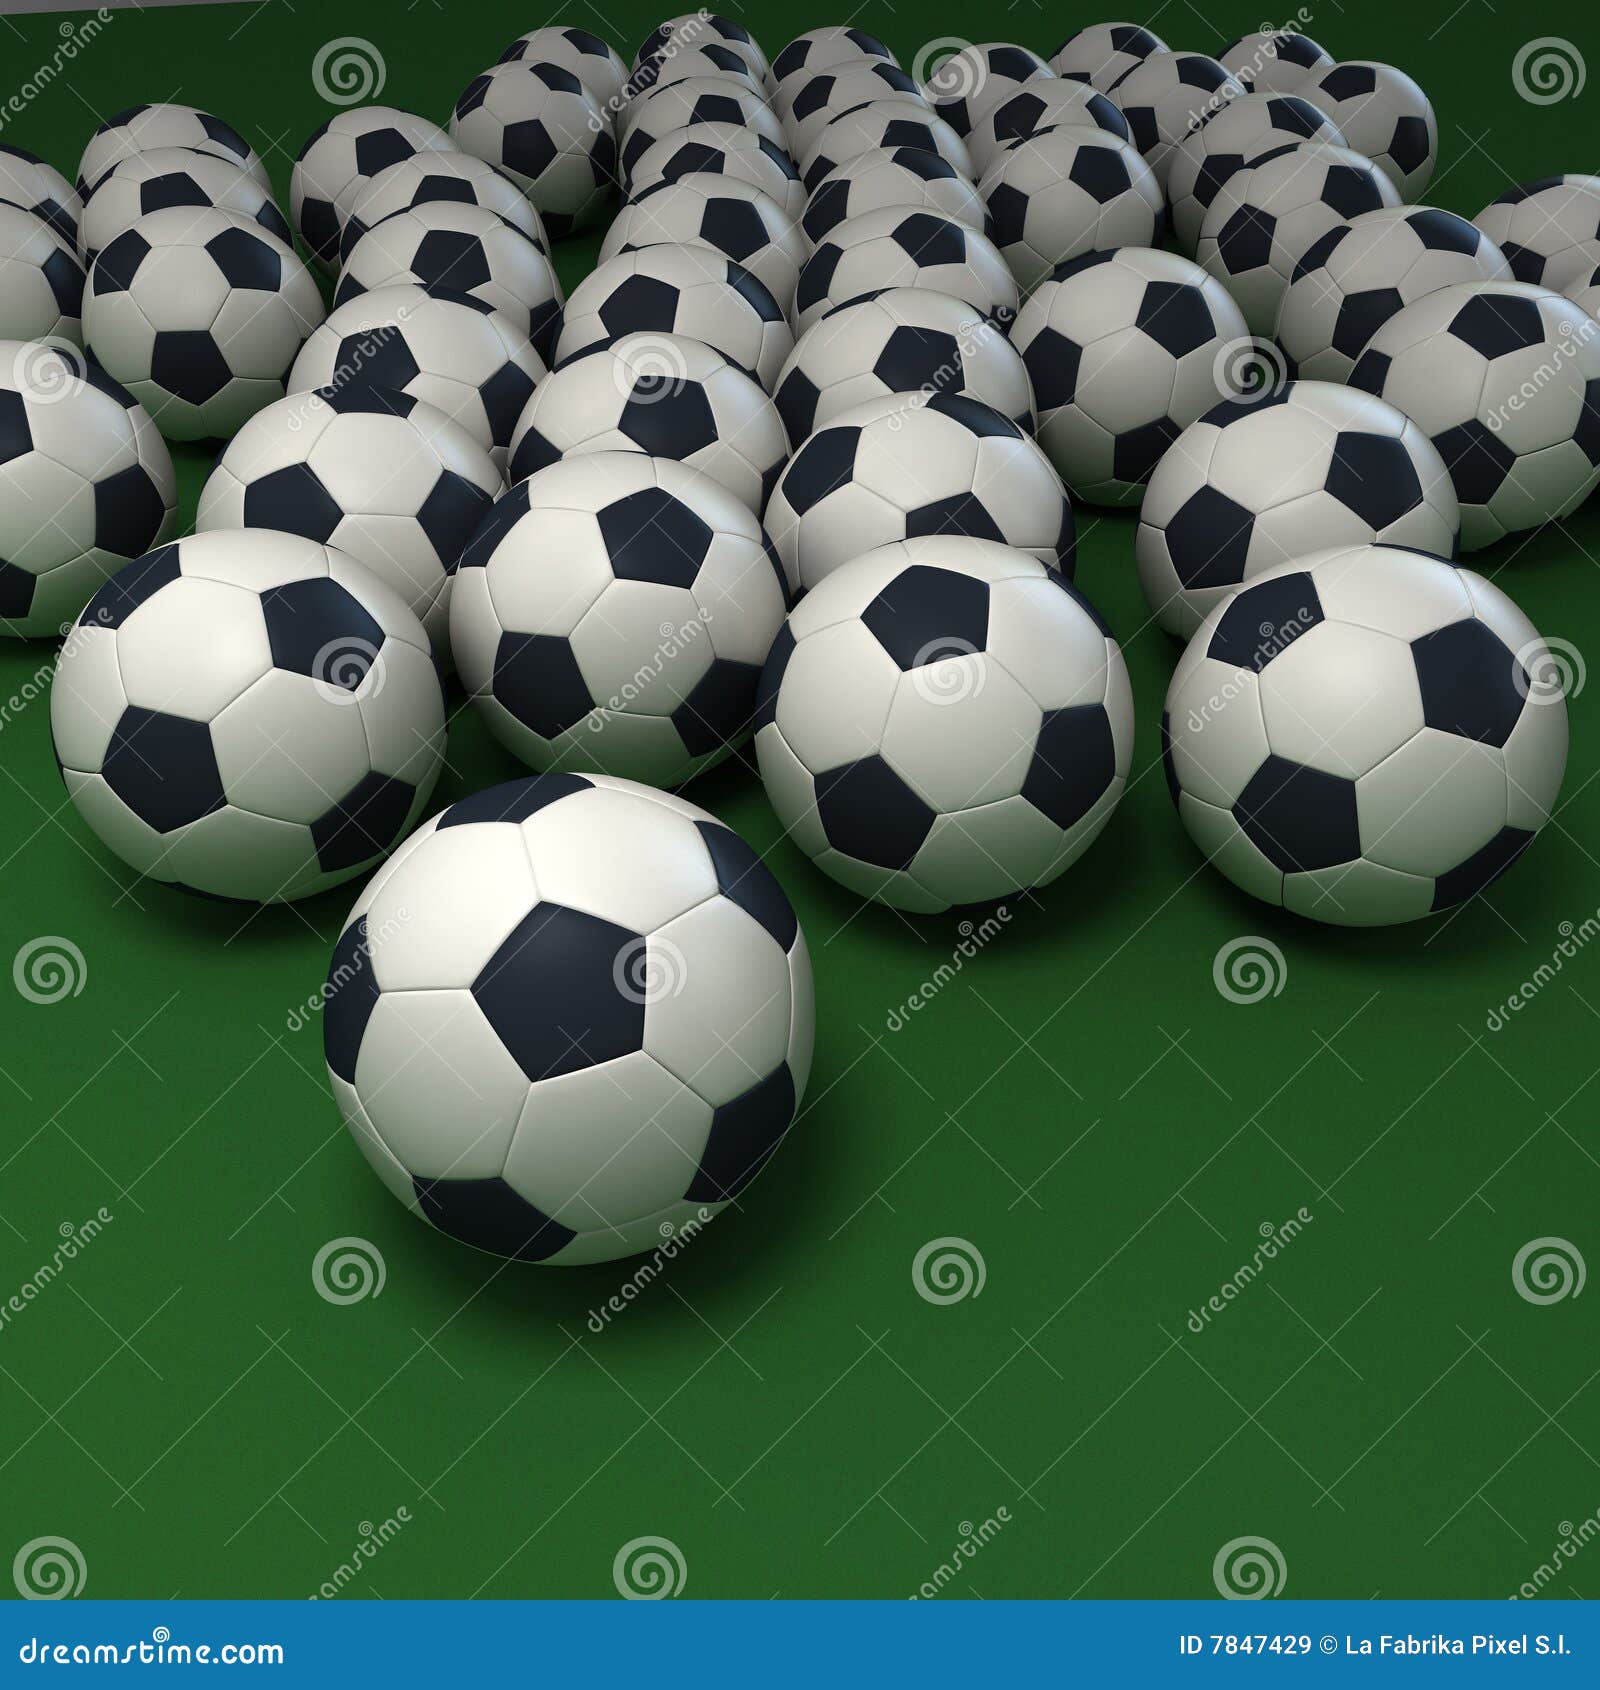 Soccer passion stock illustration. Illustration of foot - 7847429